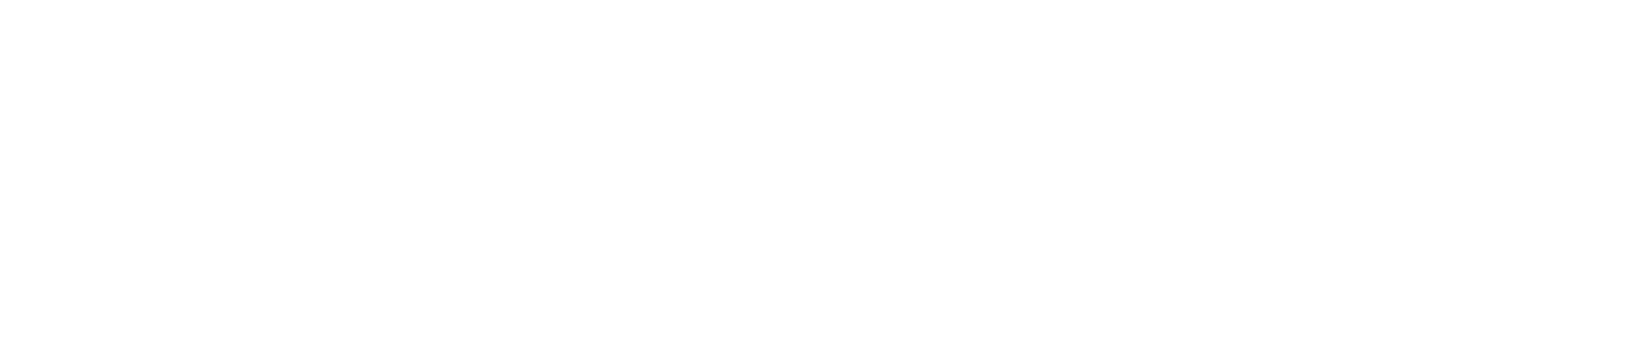 Lennox Logo groß für dunkle Hintergründe (transparentes PNG)